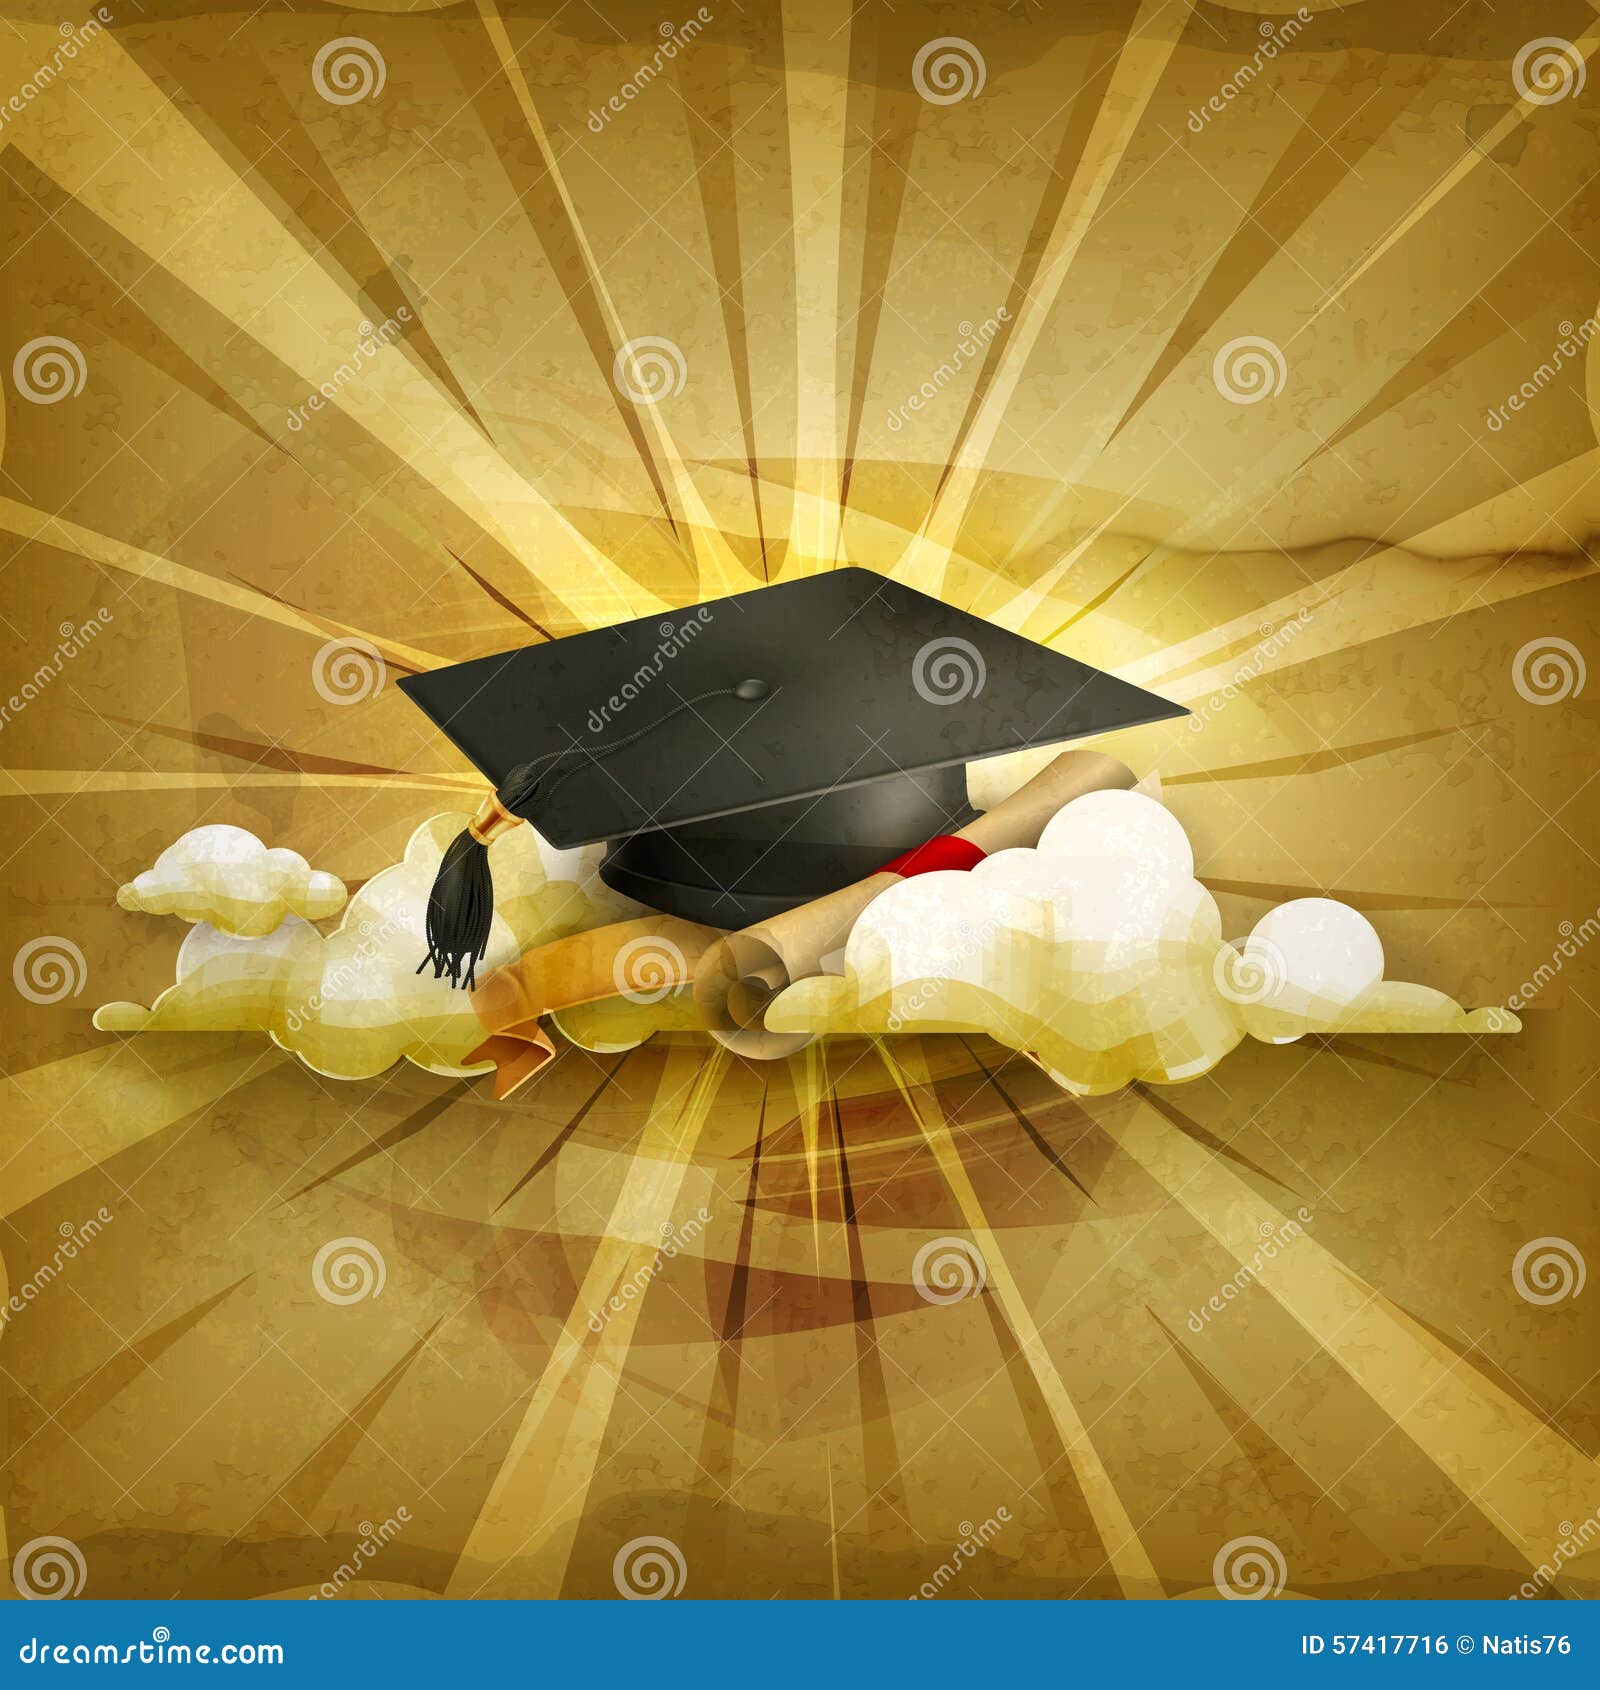 Graduation cap and diploma stock vector. Illustration of school - 57417716